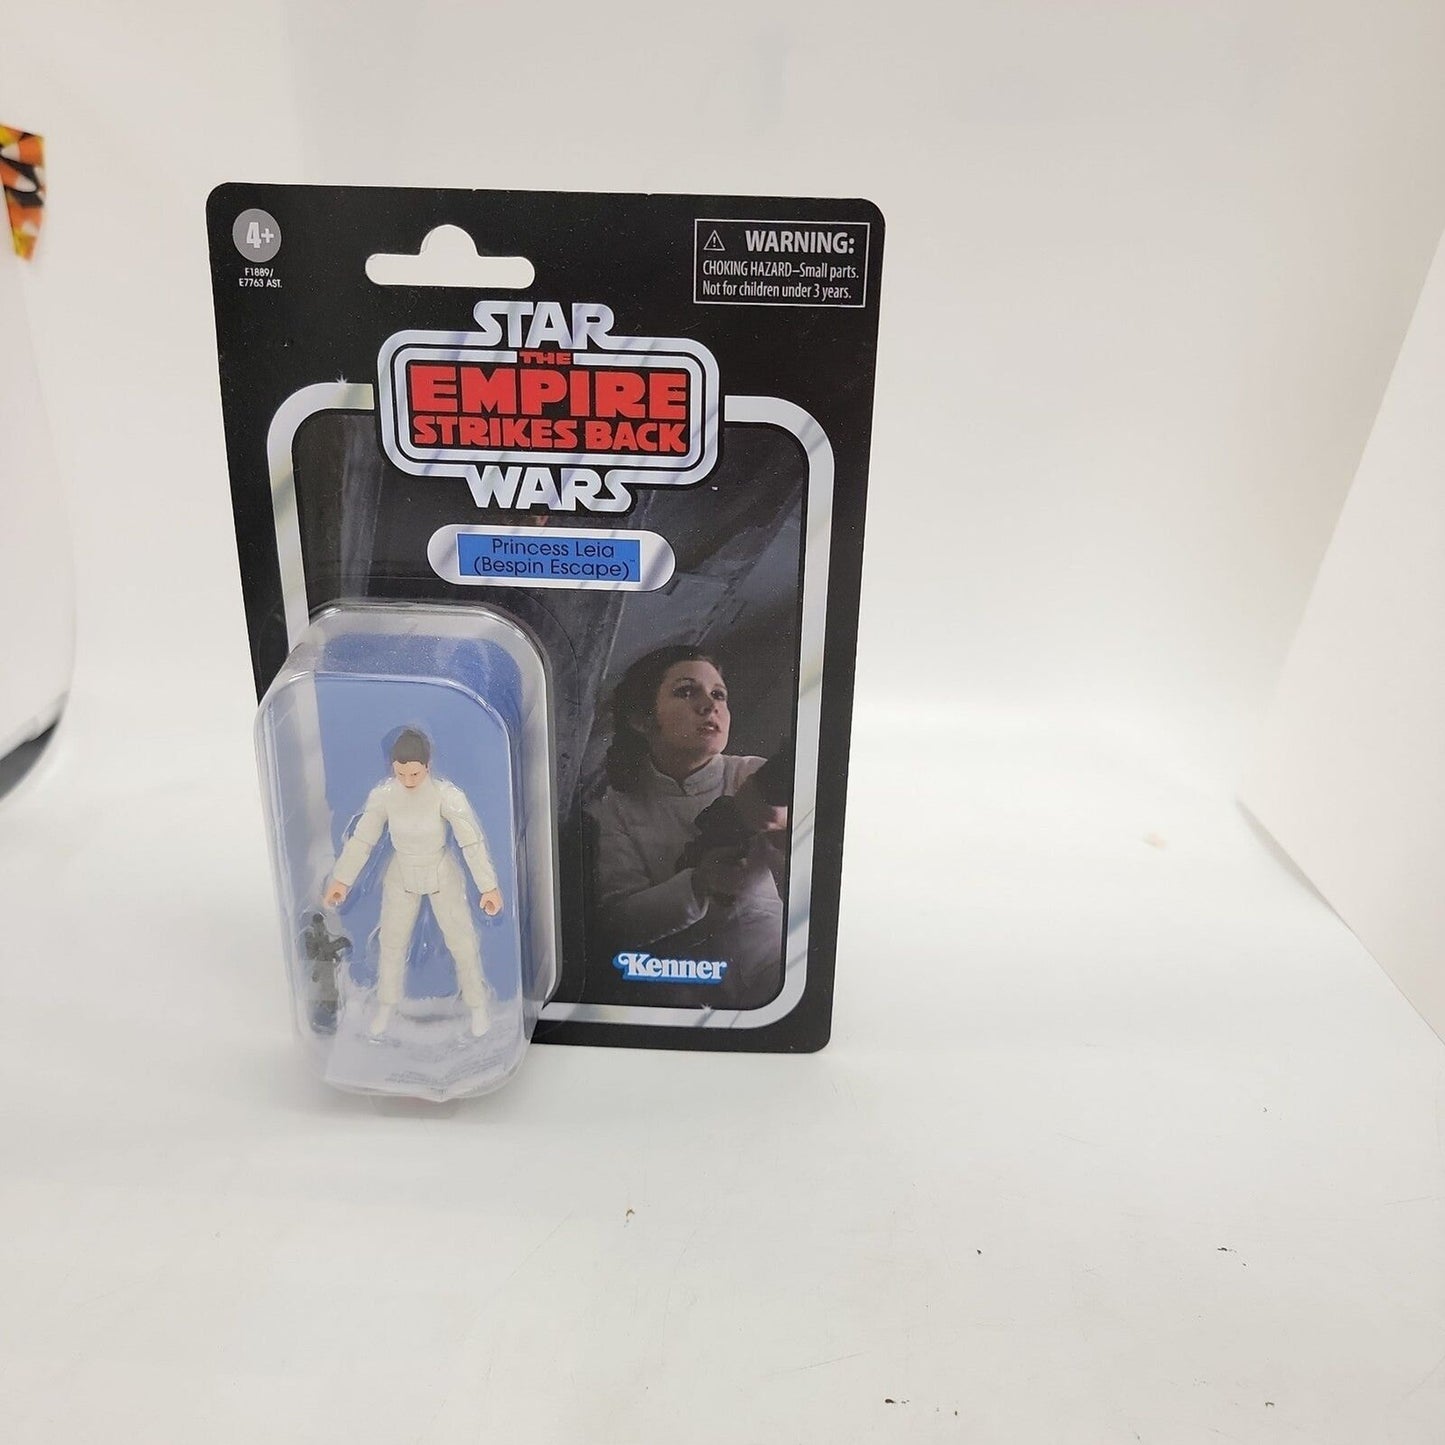 Star Wars The Empire Strikes Back Princess Leia (Bespin Escape)